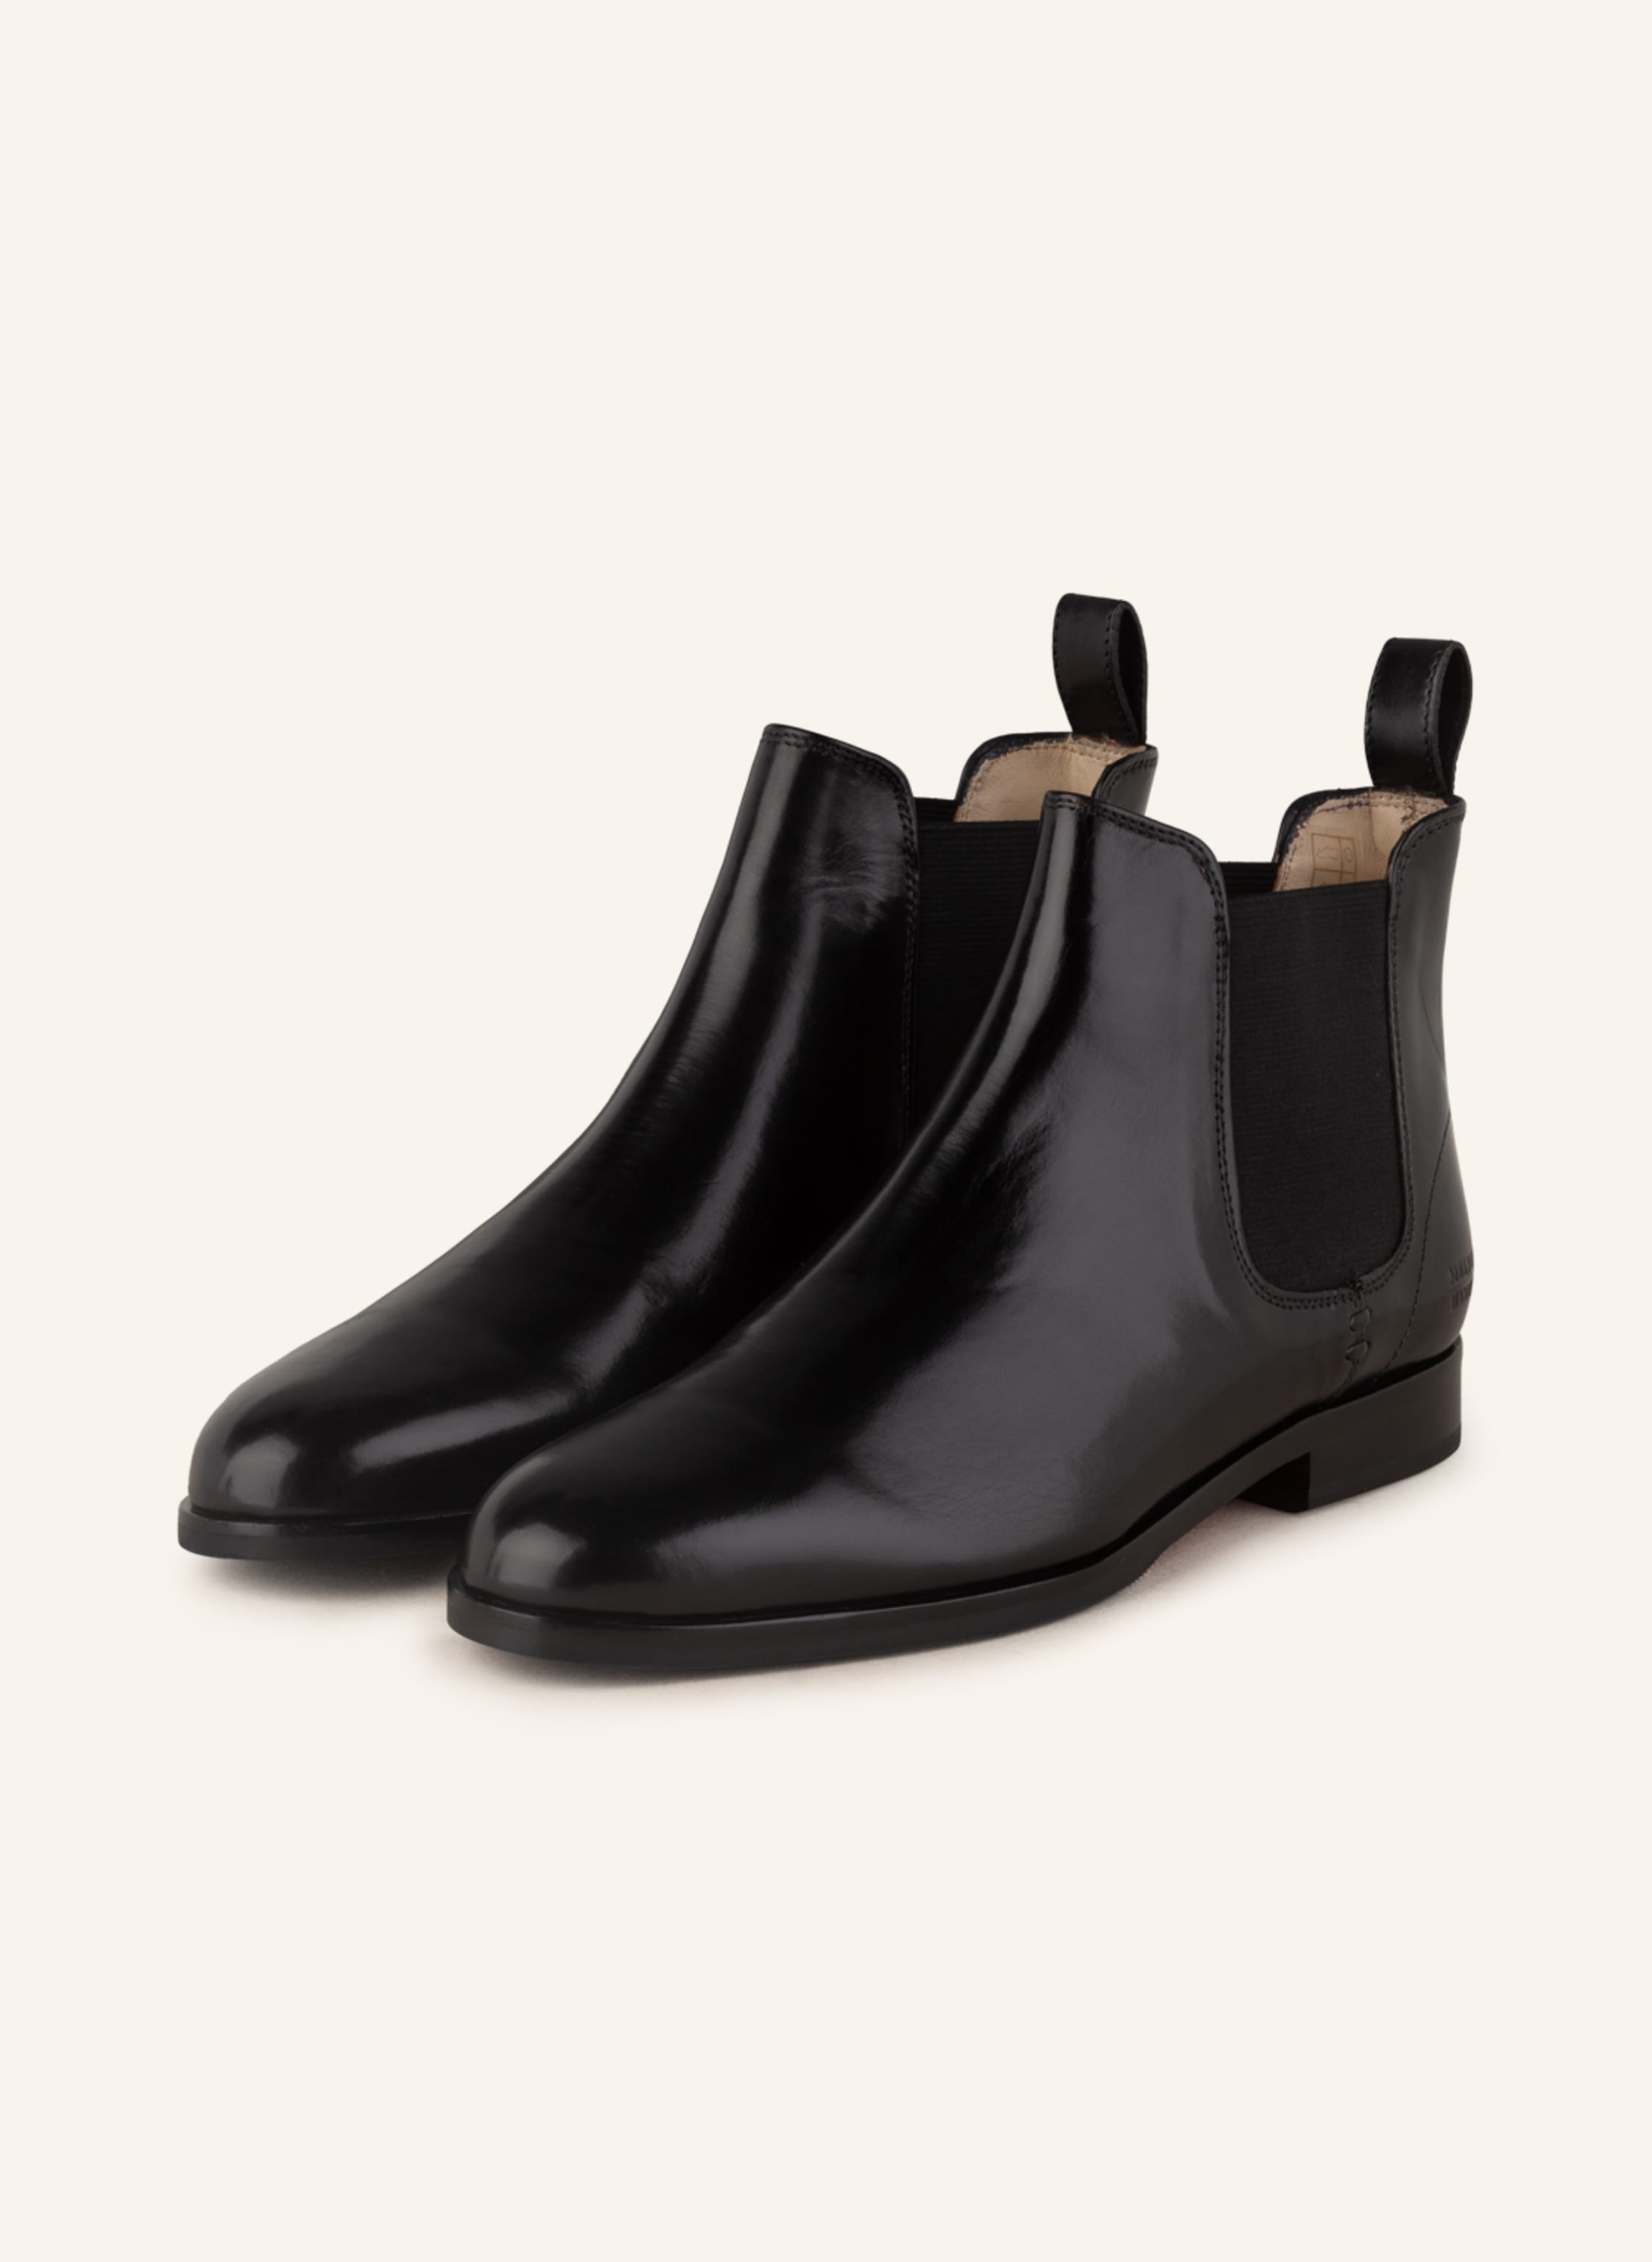 MELVIN & HAMILTON boots SUSAN in black | Breuninger